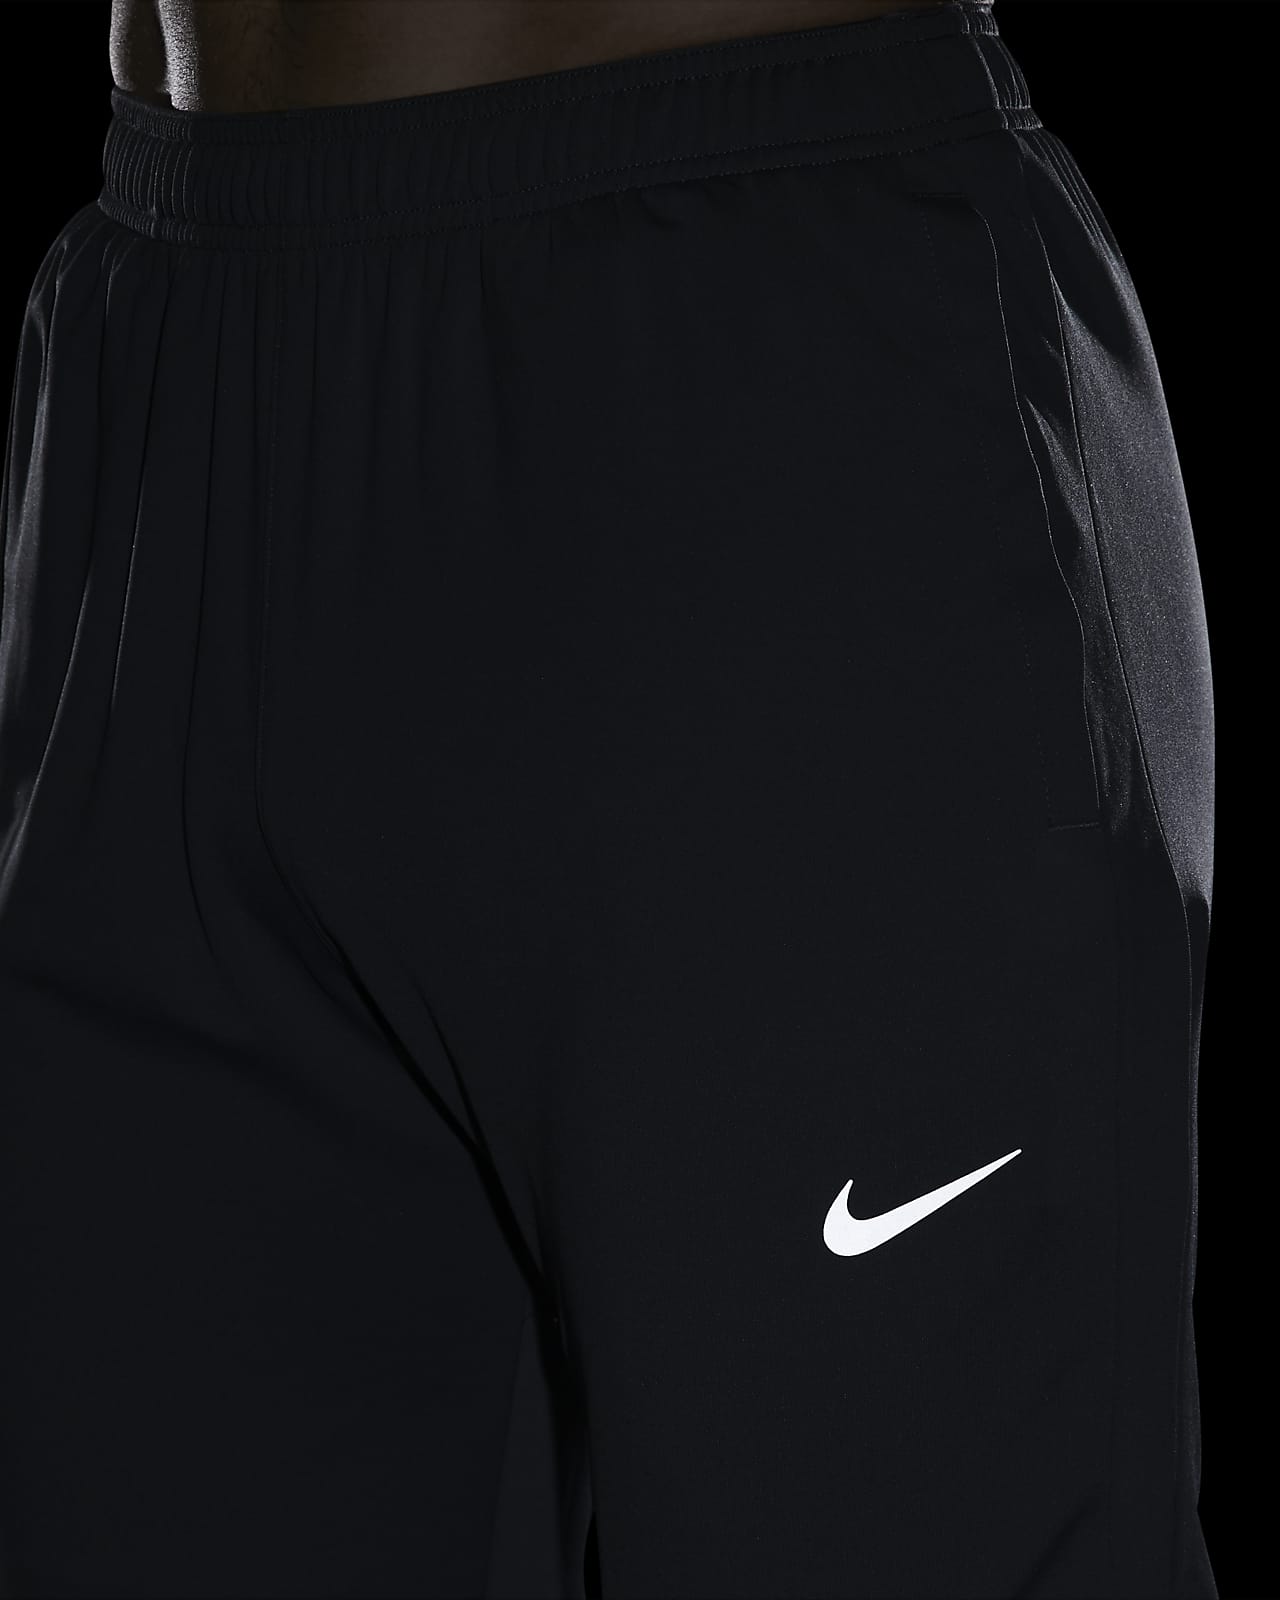 Men's Nike Dri-Fit Pants - Size Small